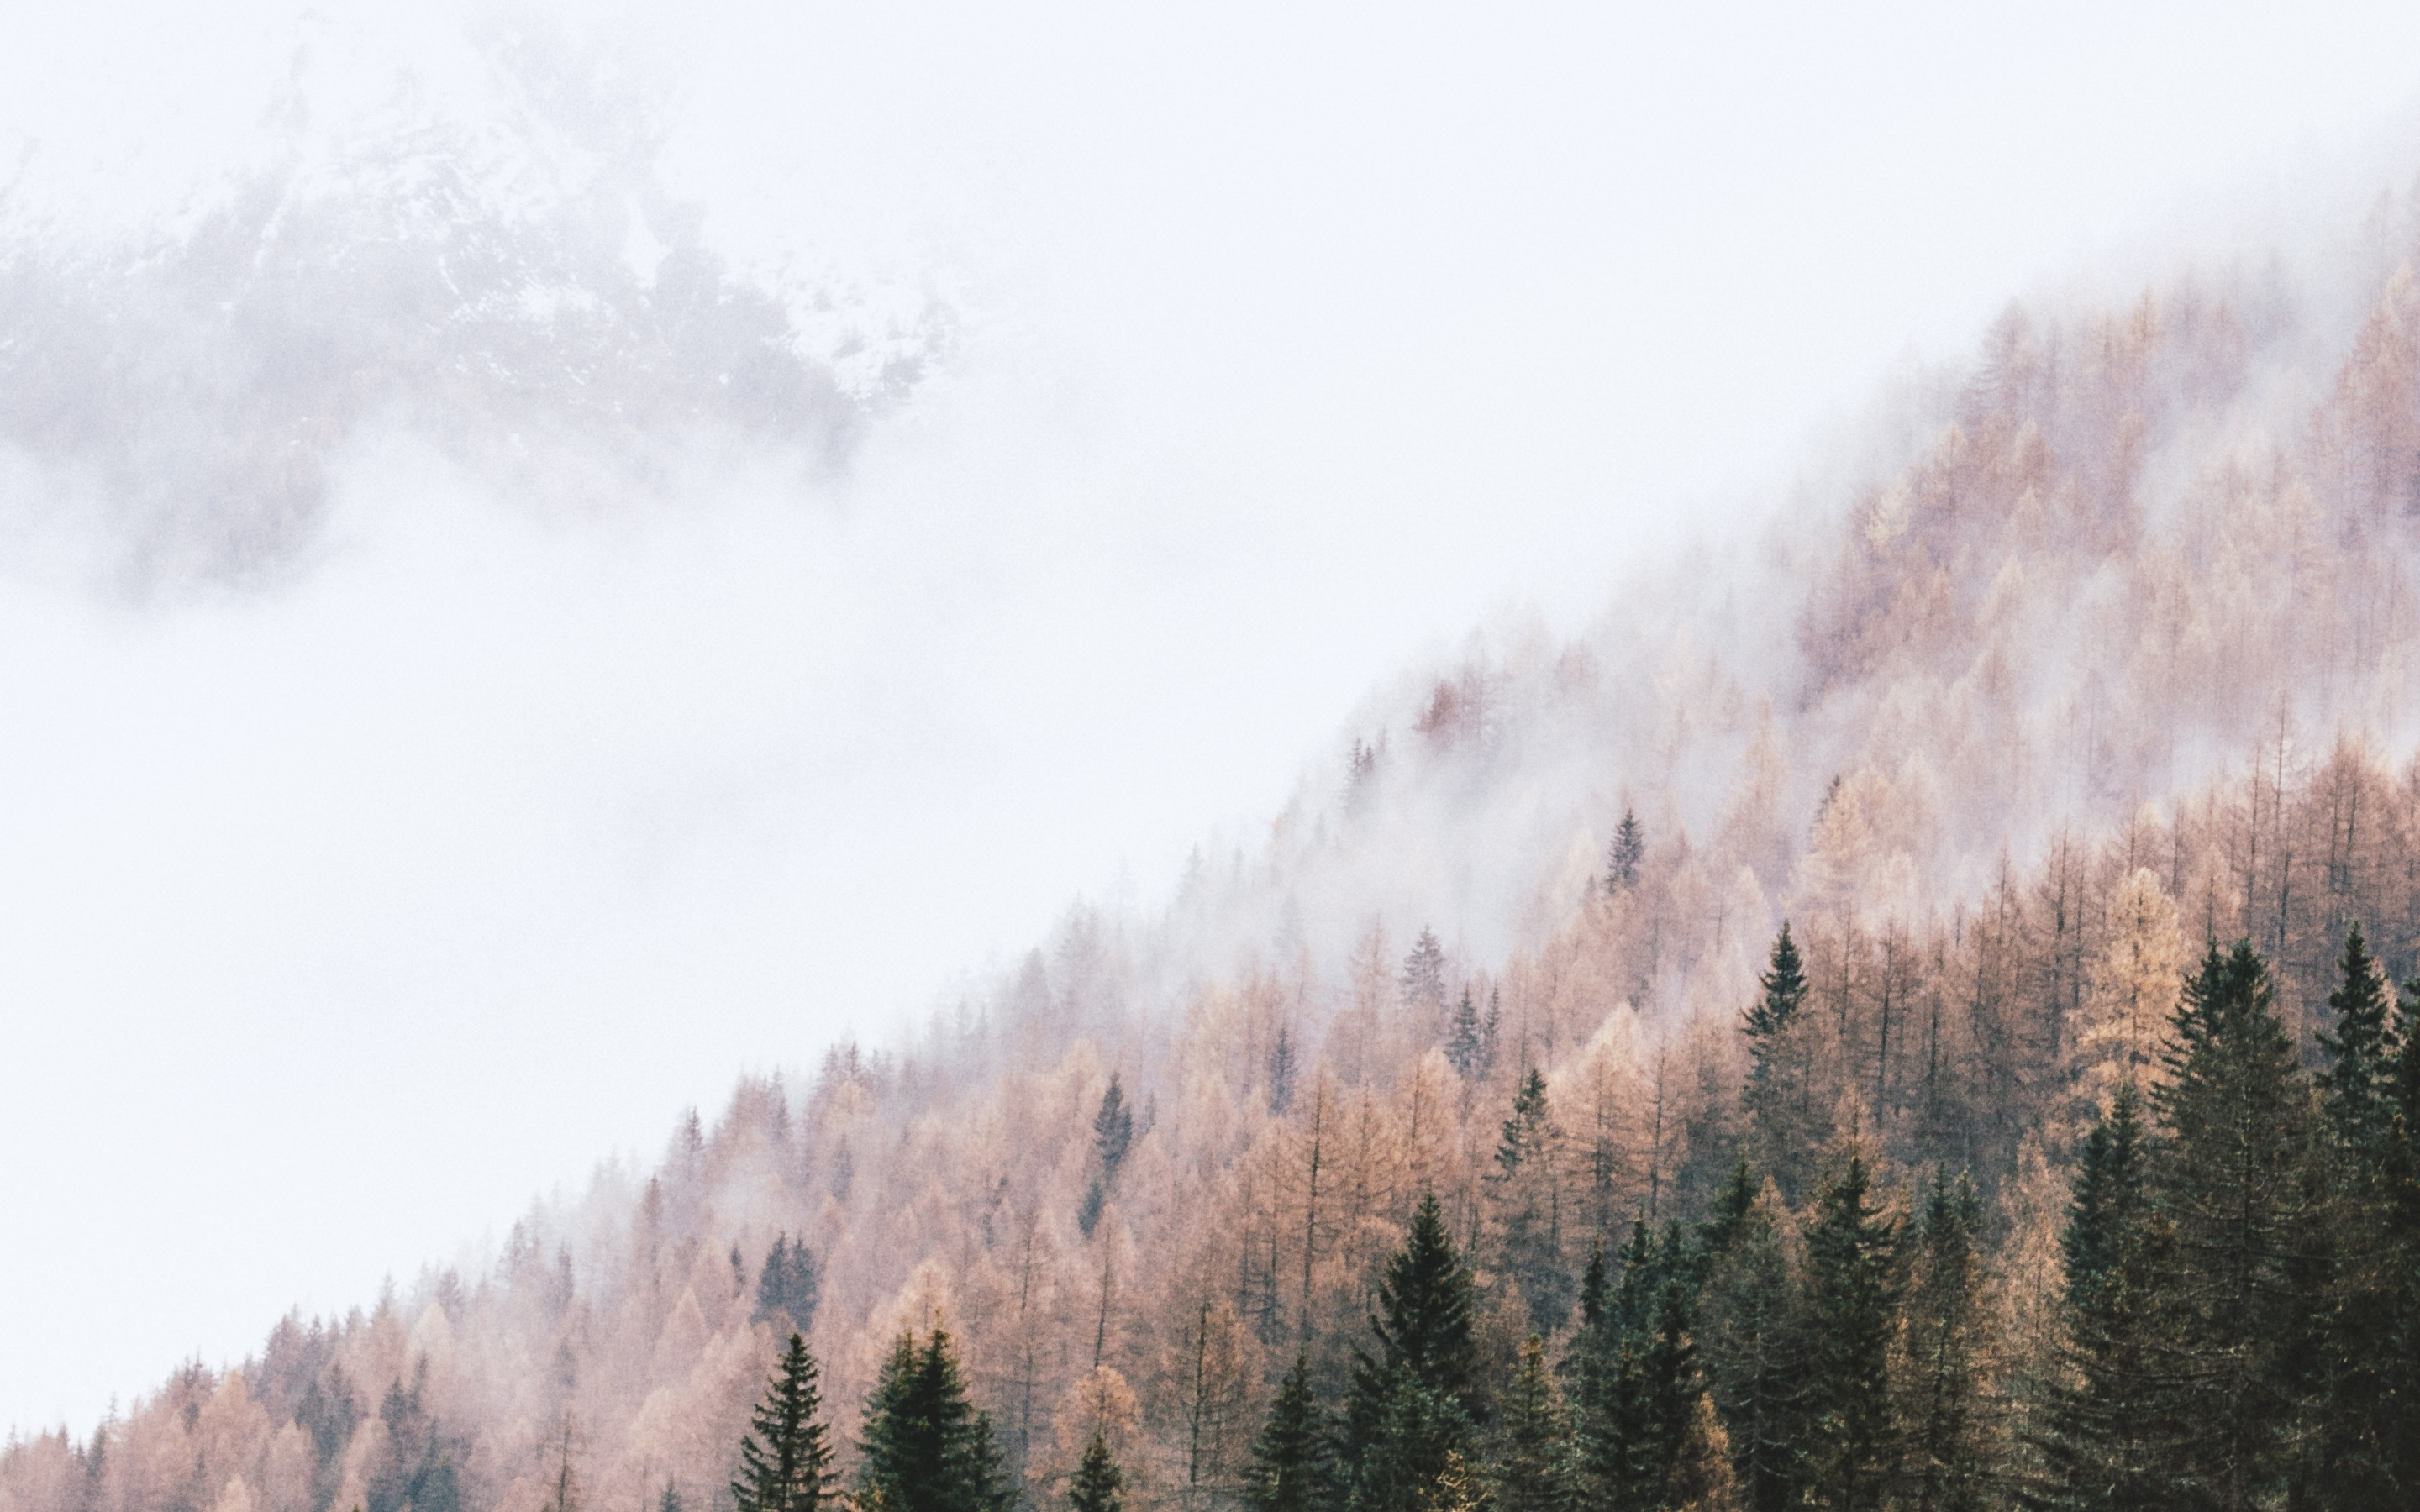 Autumn, peak of trees, pine trees, mist, 2880x1800 wallpaper